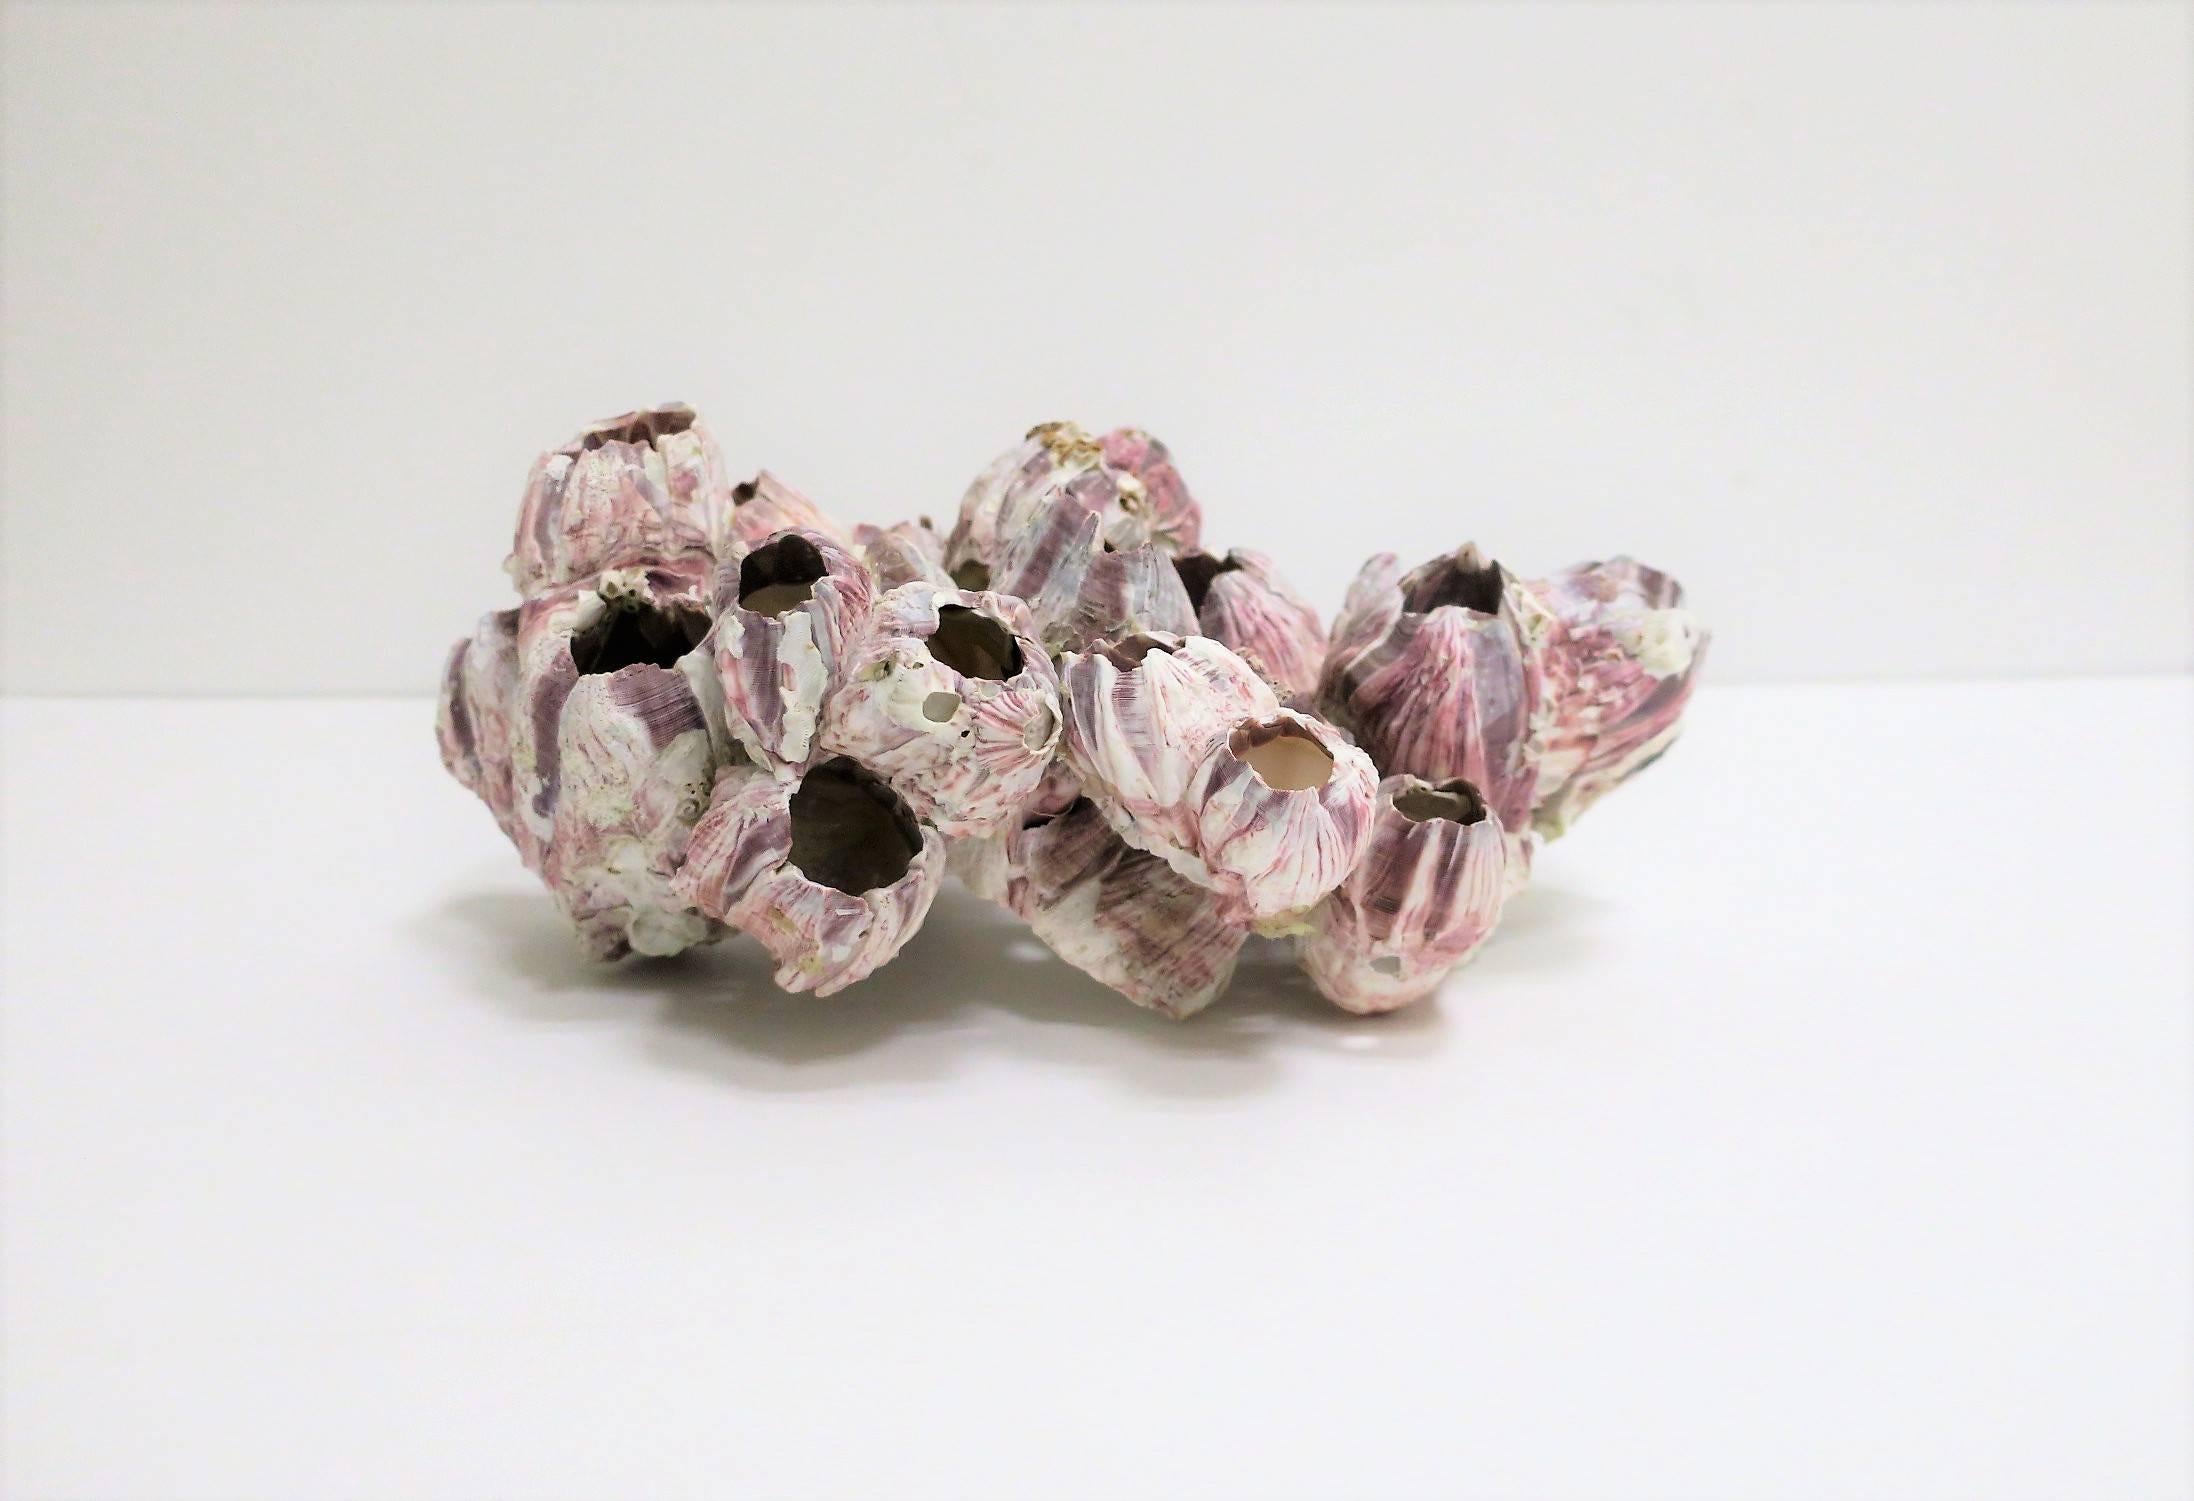 Vintage White and Purple Barnacle Coral Specimen Sculpture 1